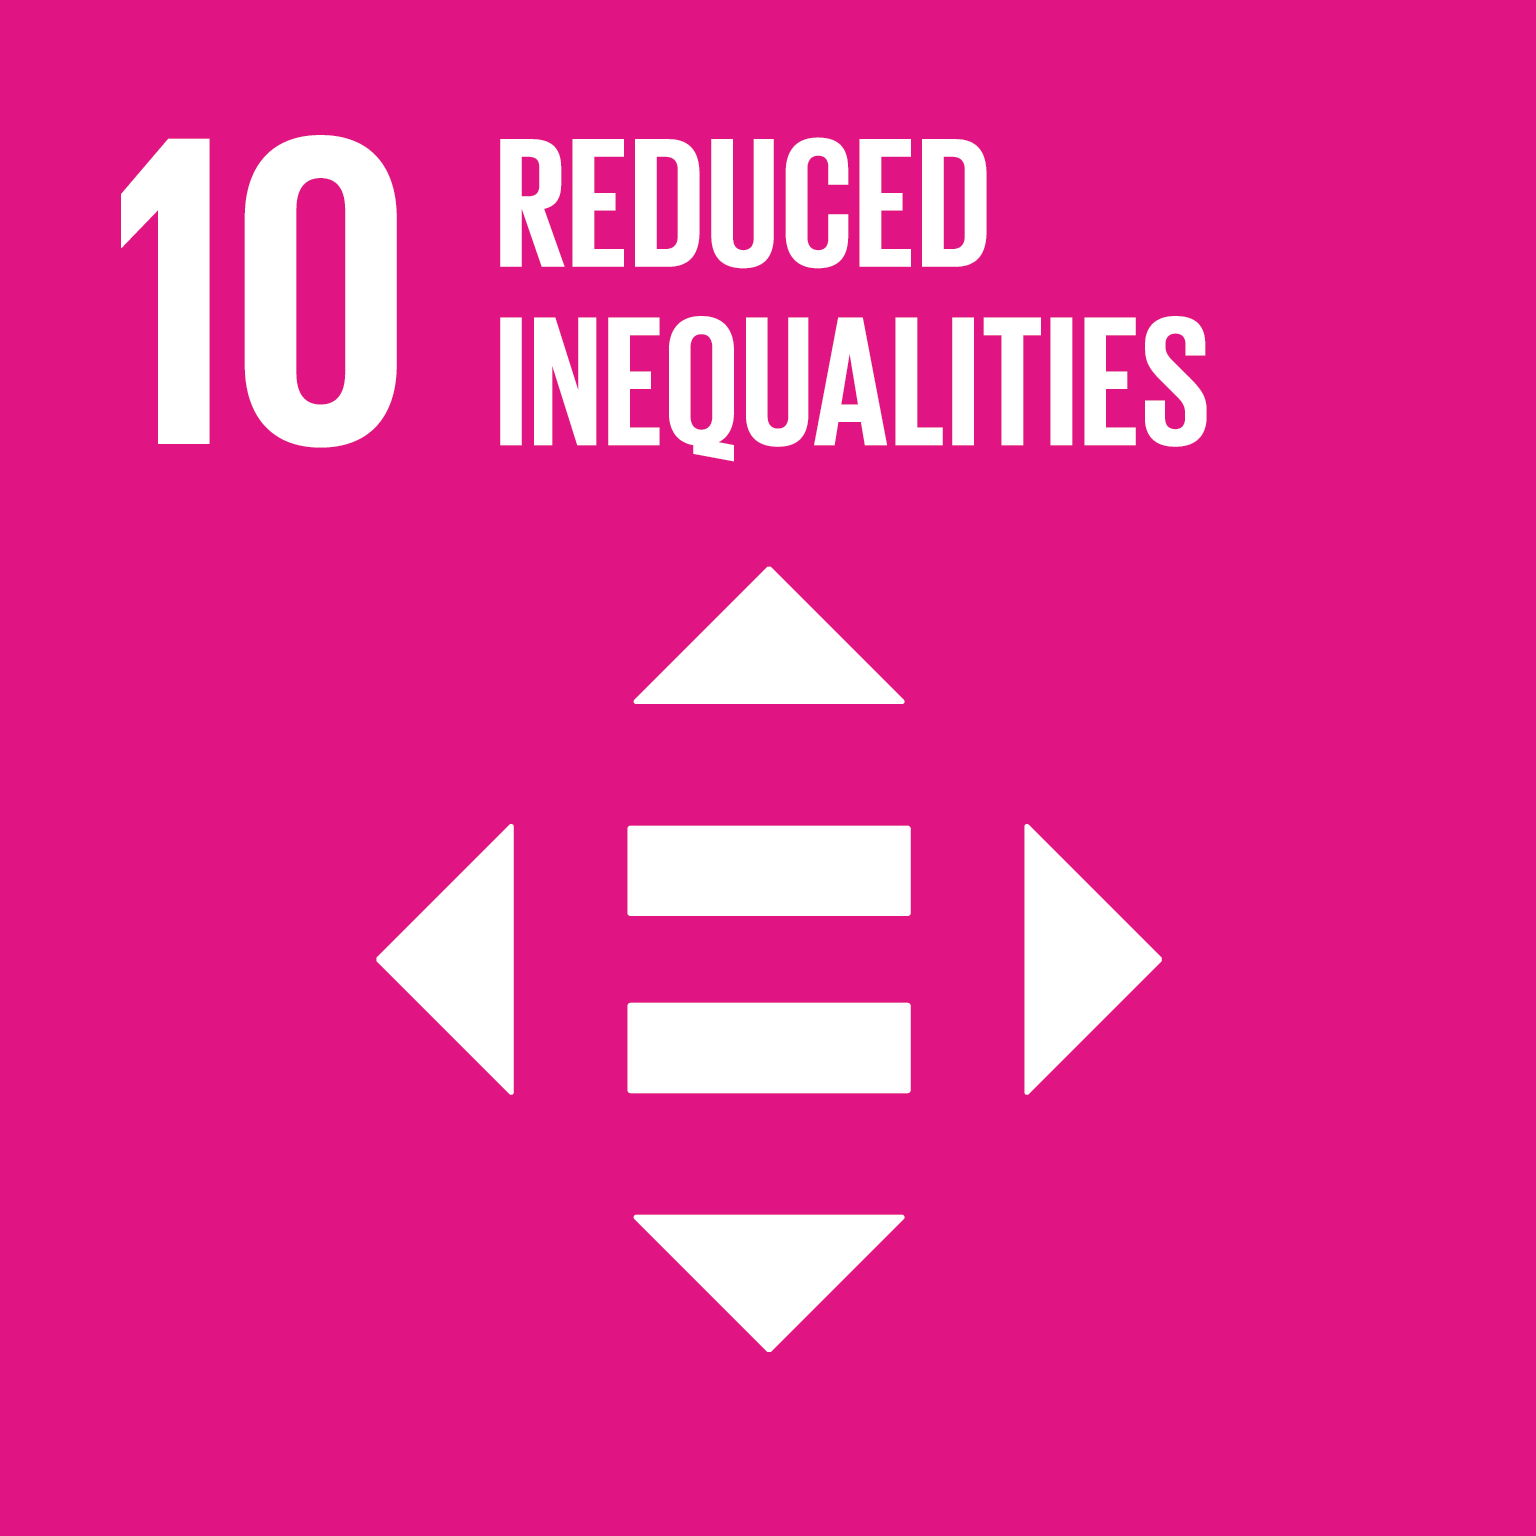 Goal 10. Reducing inequalities